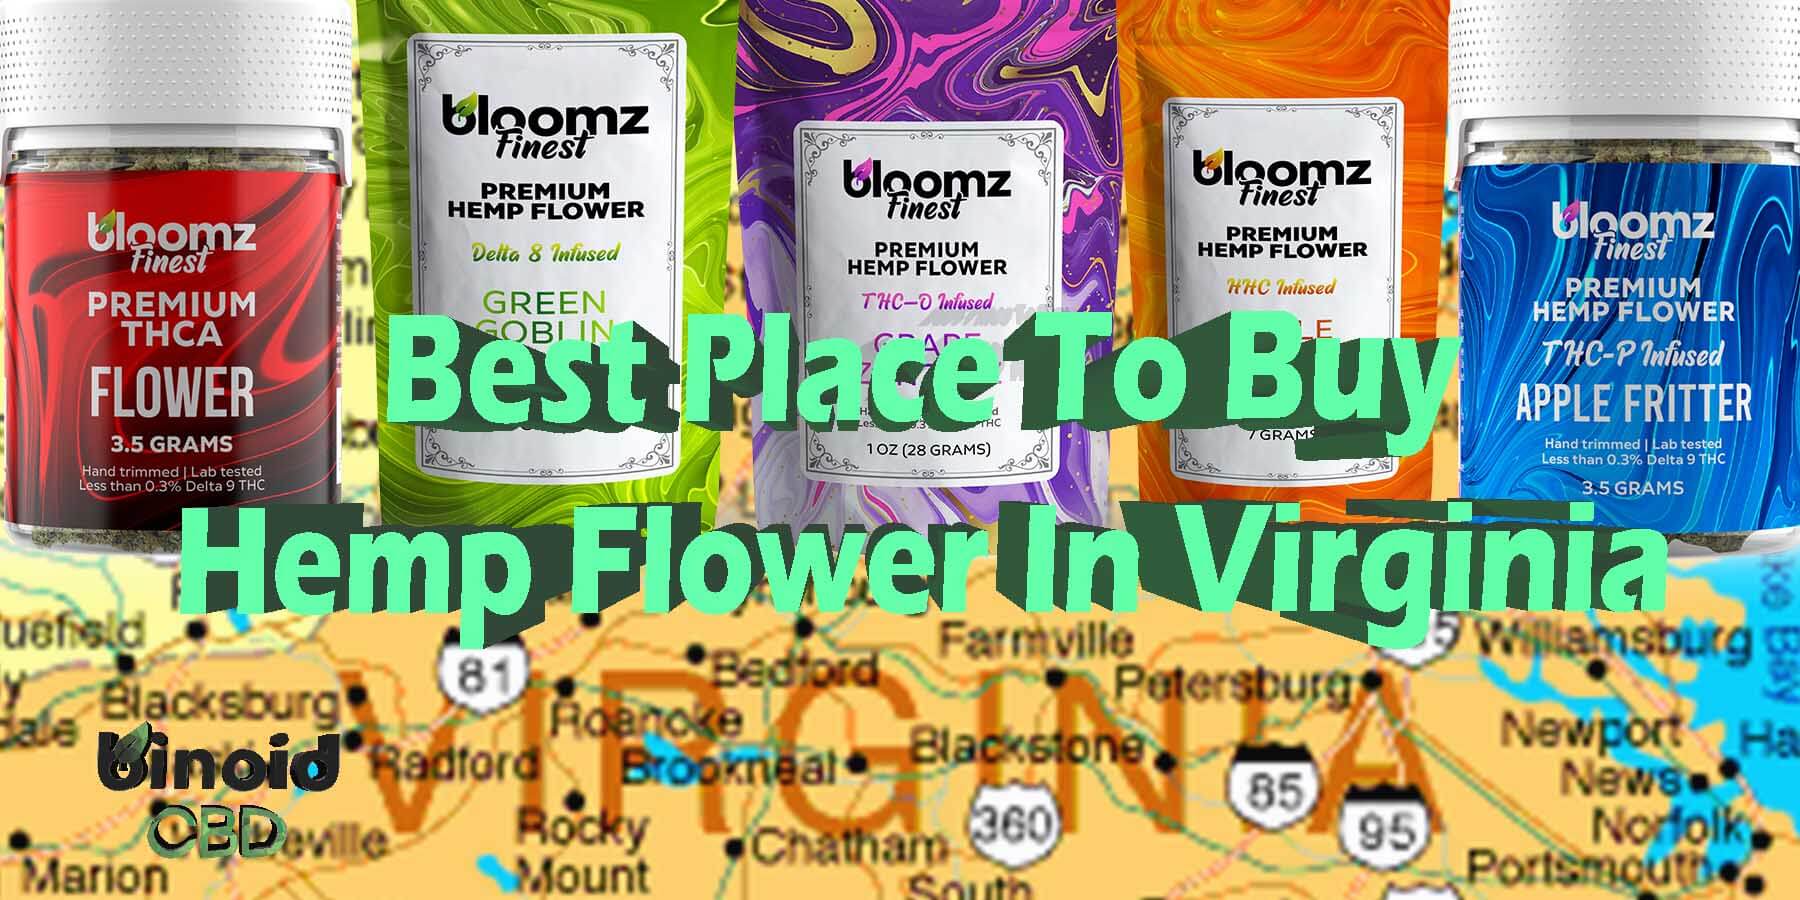 Buy Hemp Flower Virginia Pre Rolls Get Online Near Me For Sale Best Brand Strongest Real Legal Store Shop Reddit